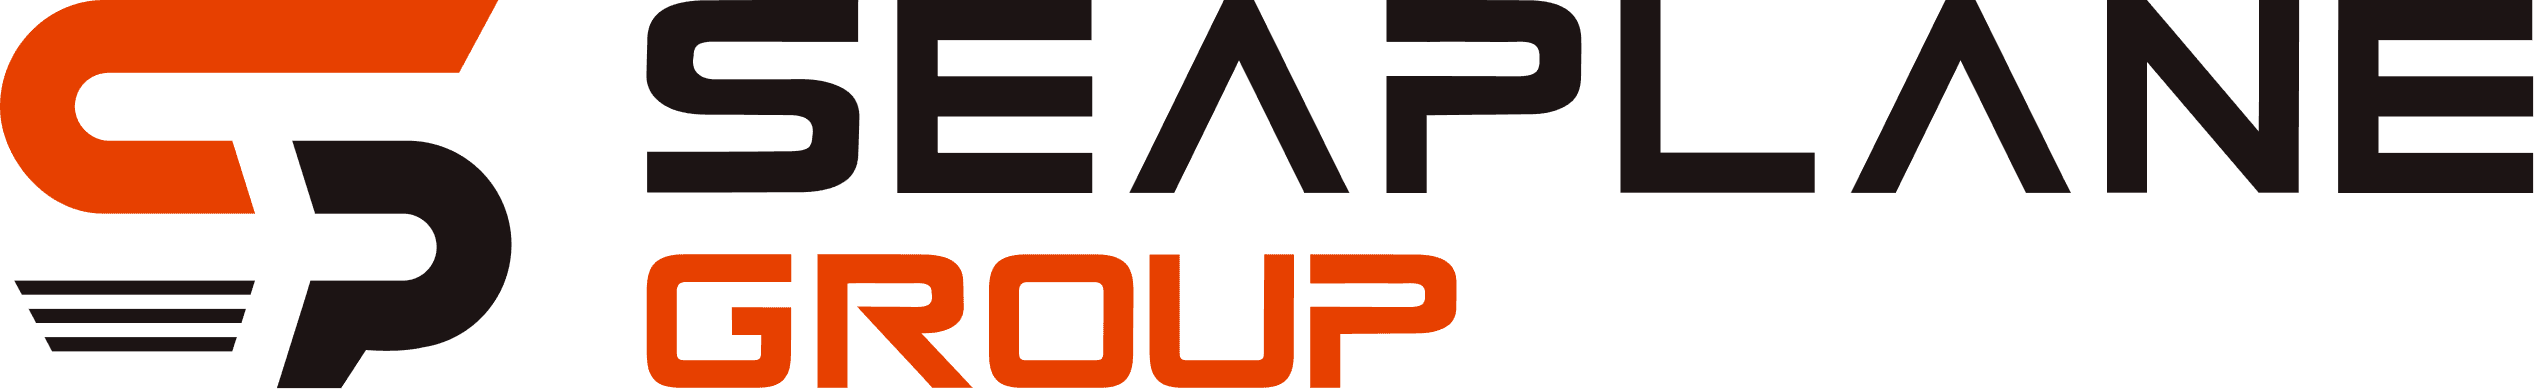 seaplane-group-logo